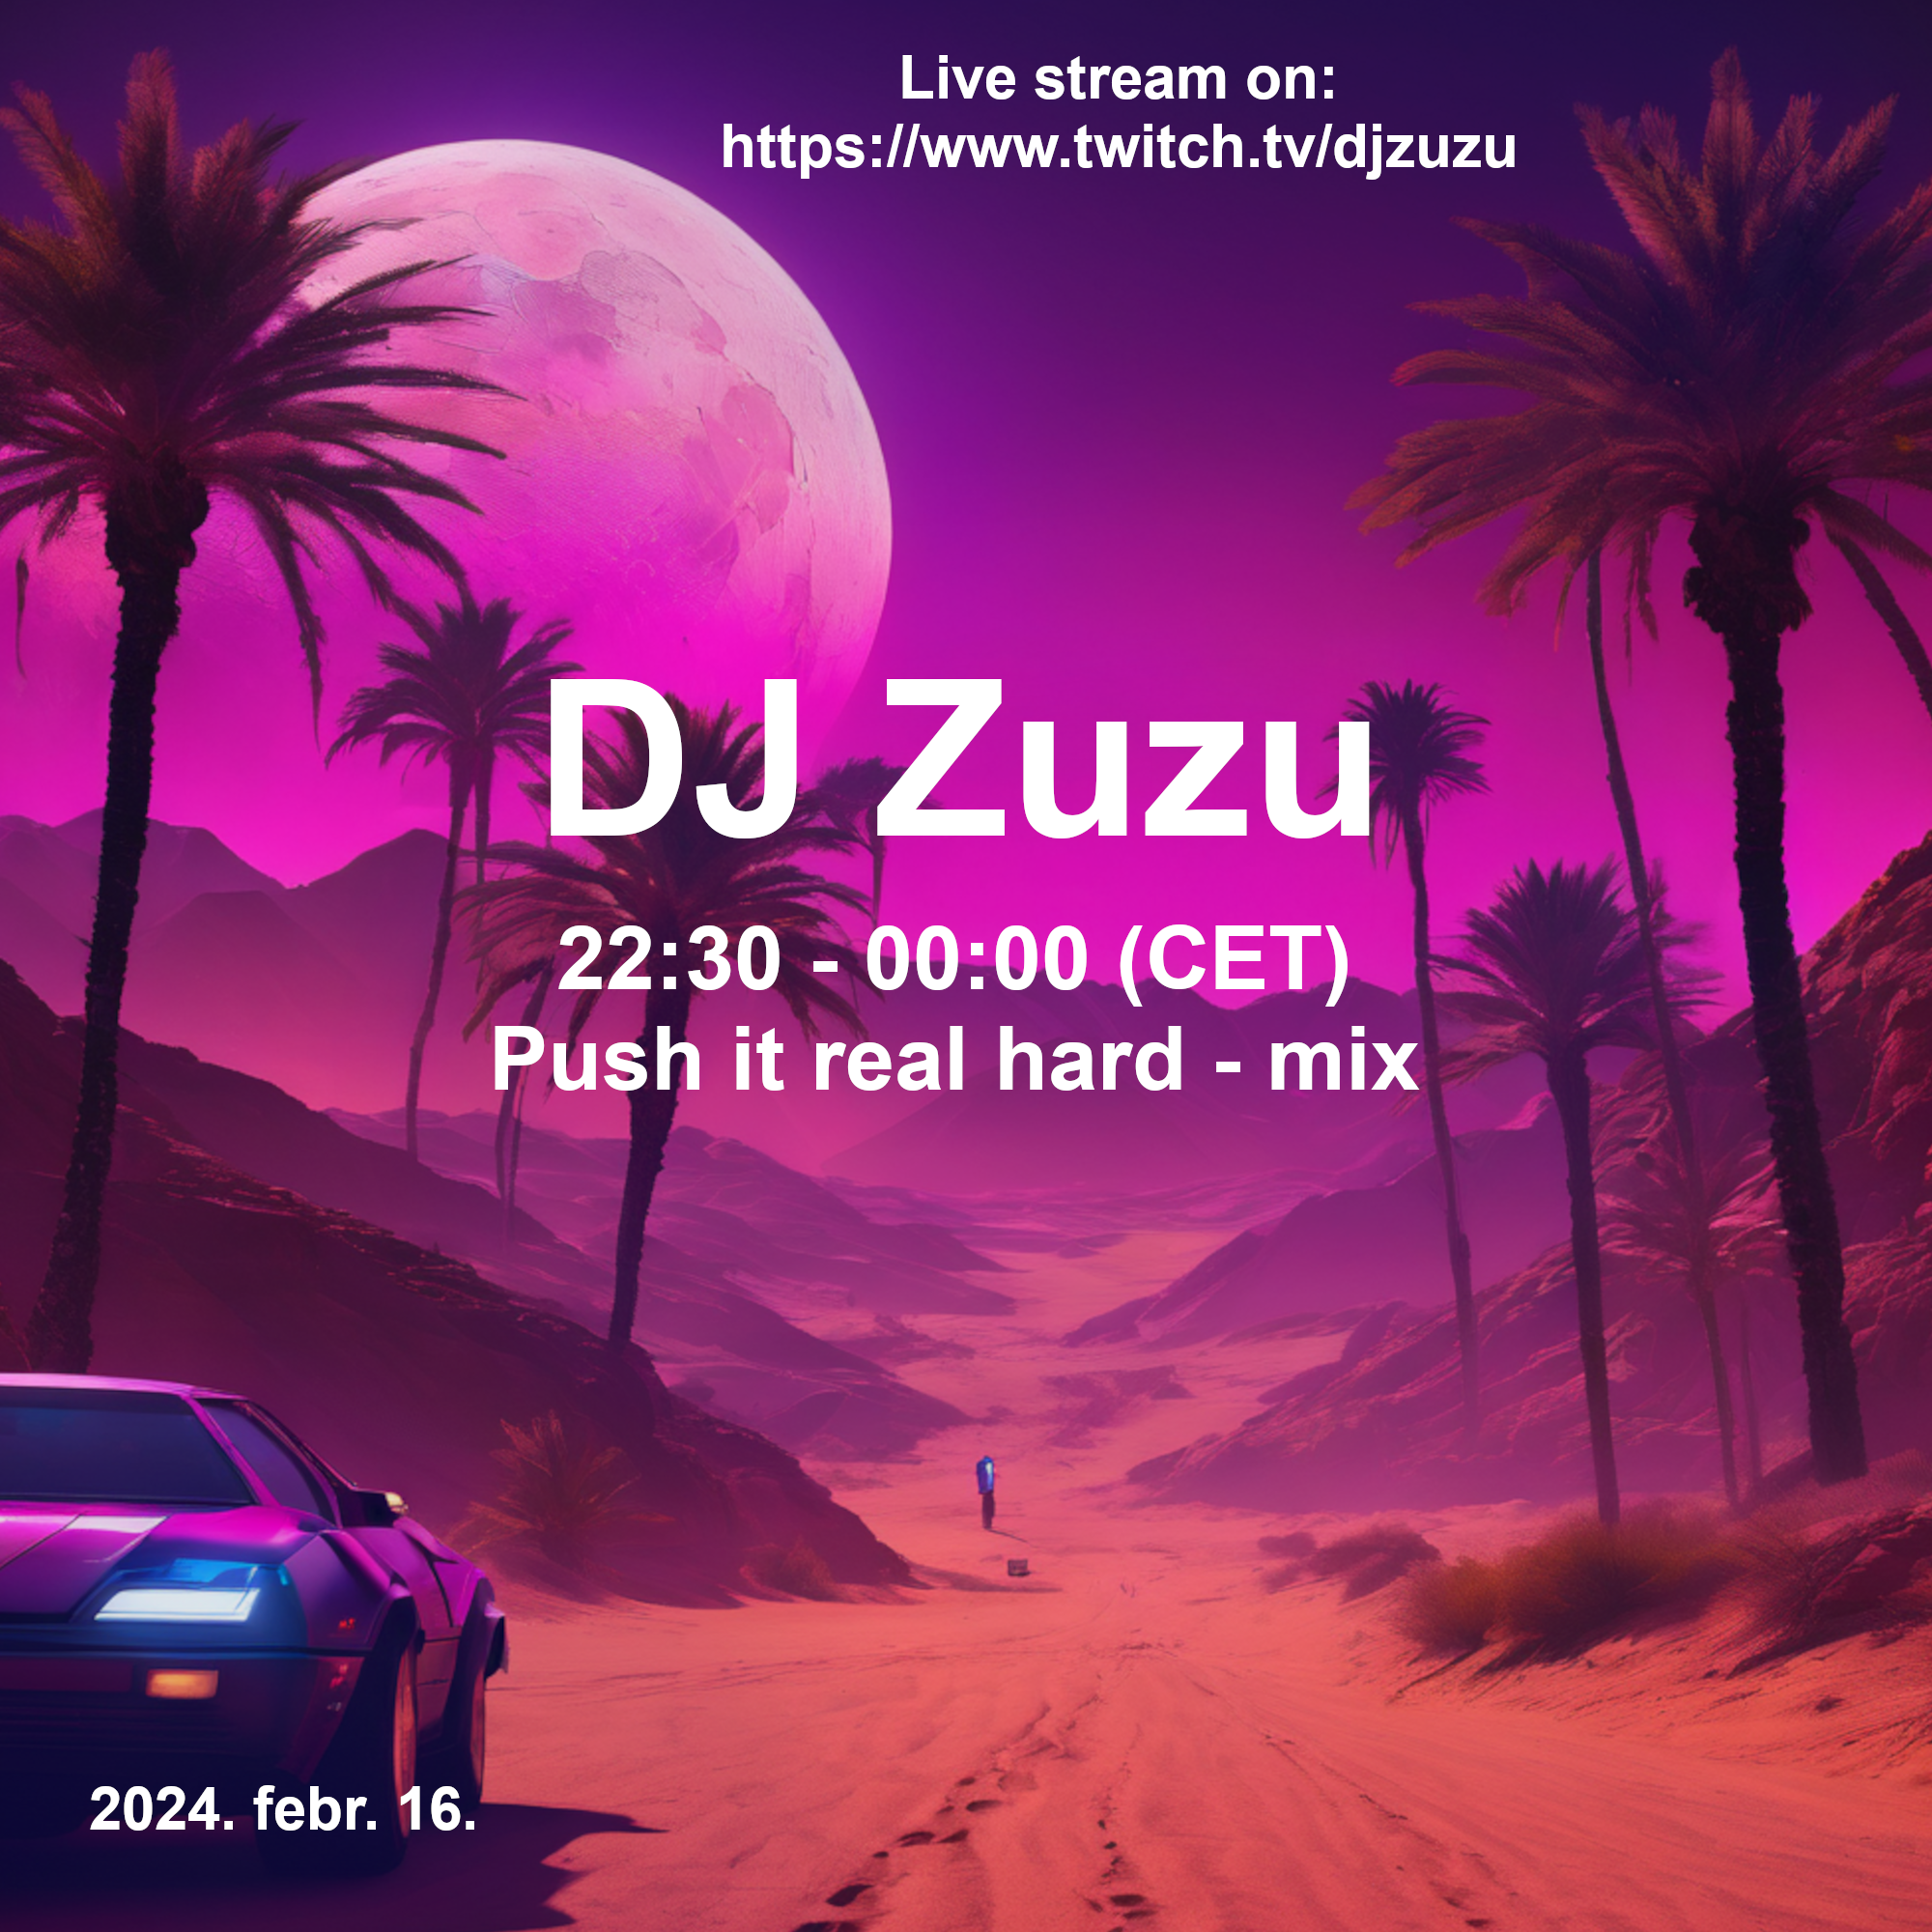 Dj Zuzu Push it real hard mix event flyer 20240216